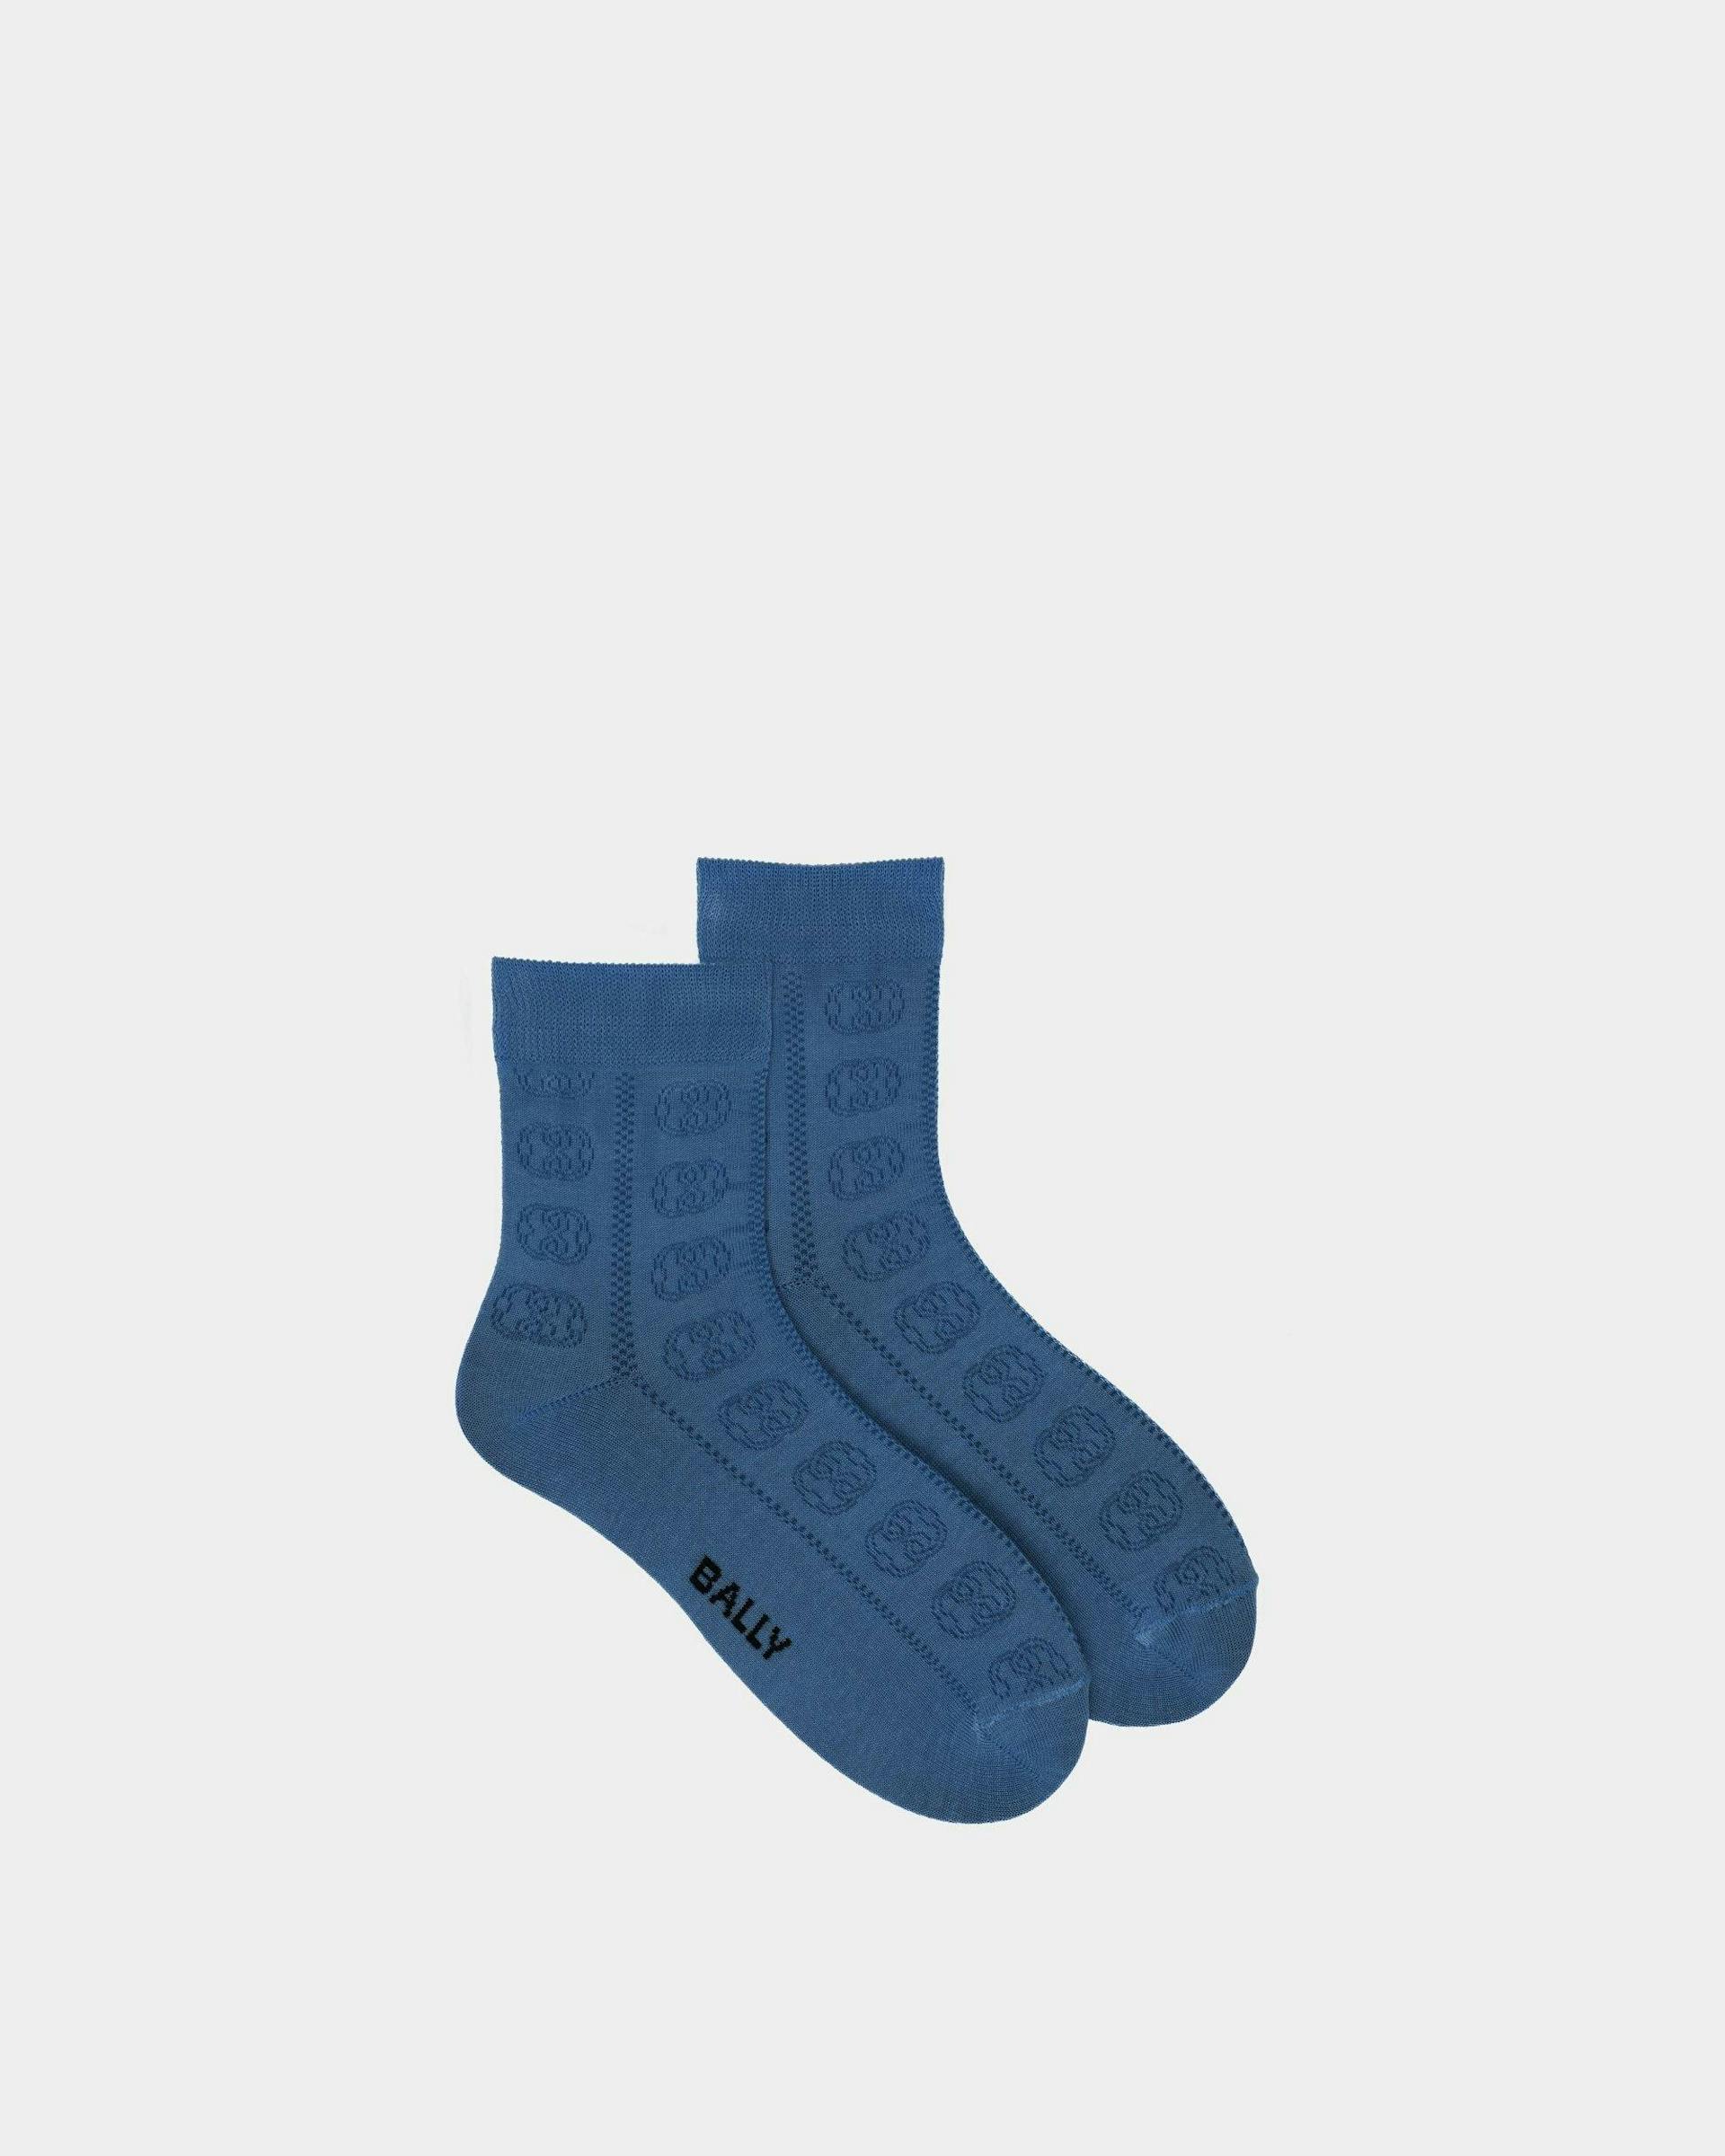 Women's Socks in Blue Cotton | Bally | Still Life Top